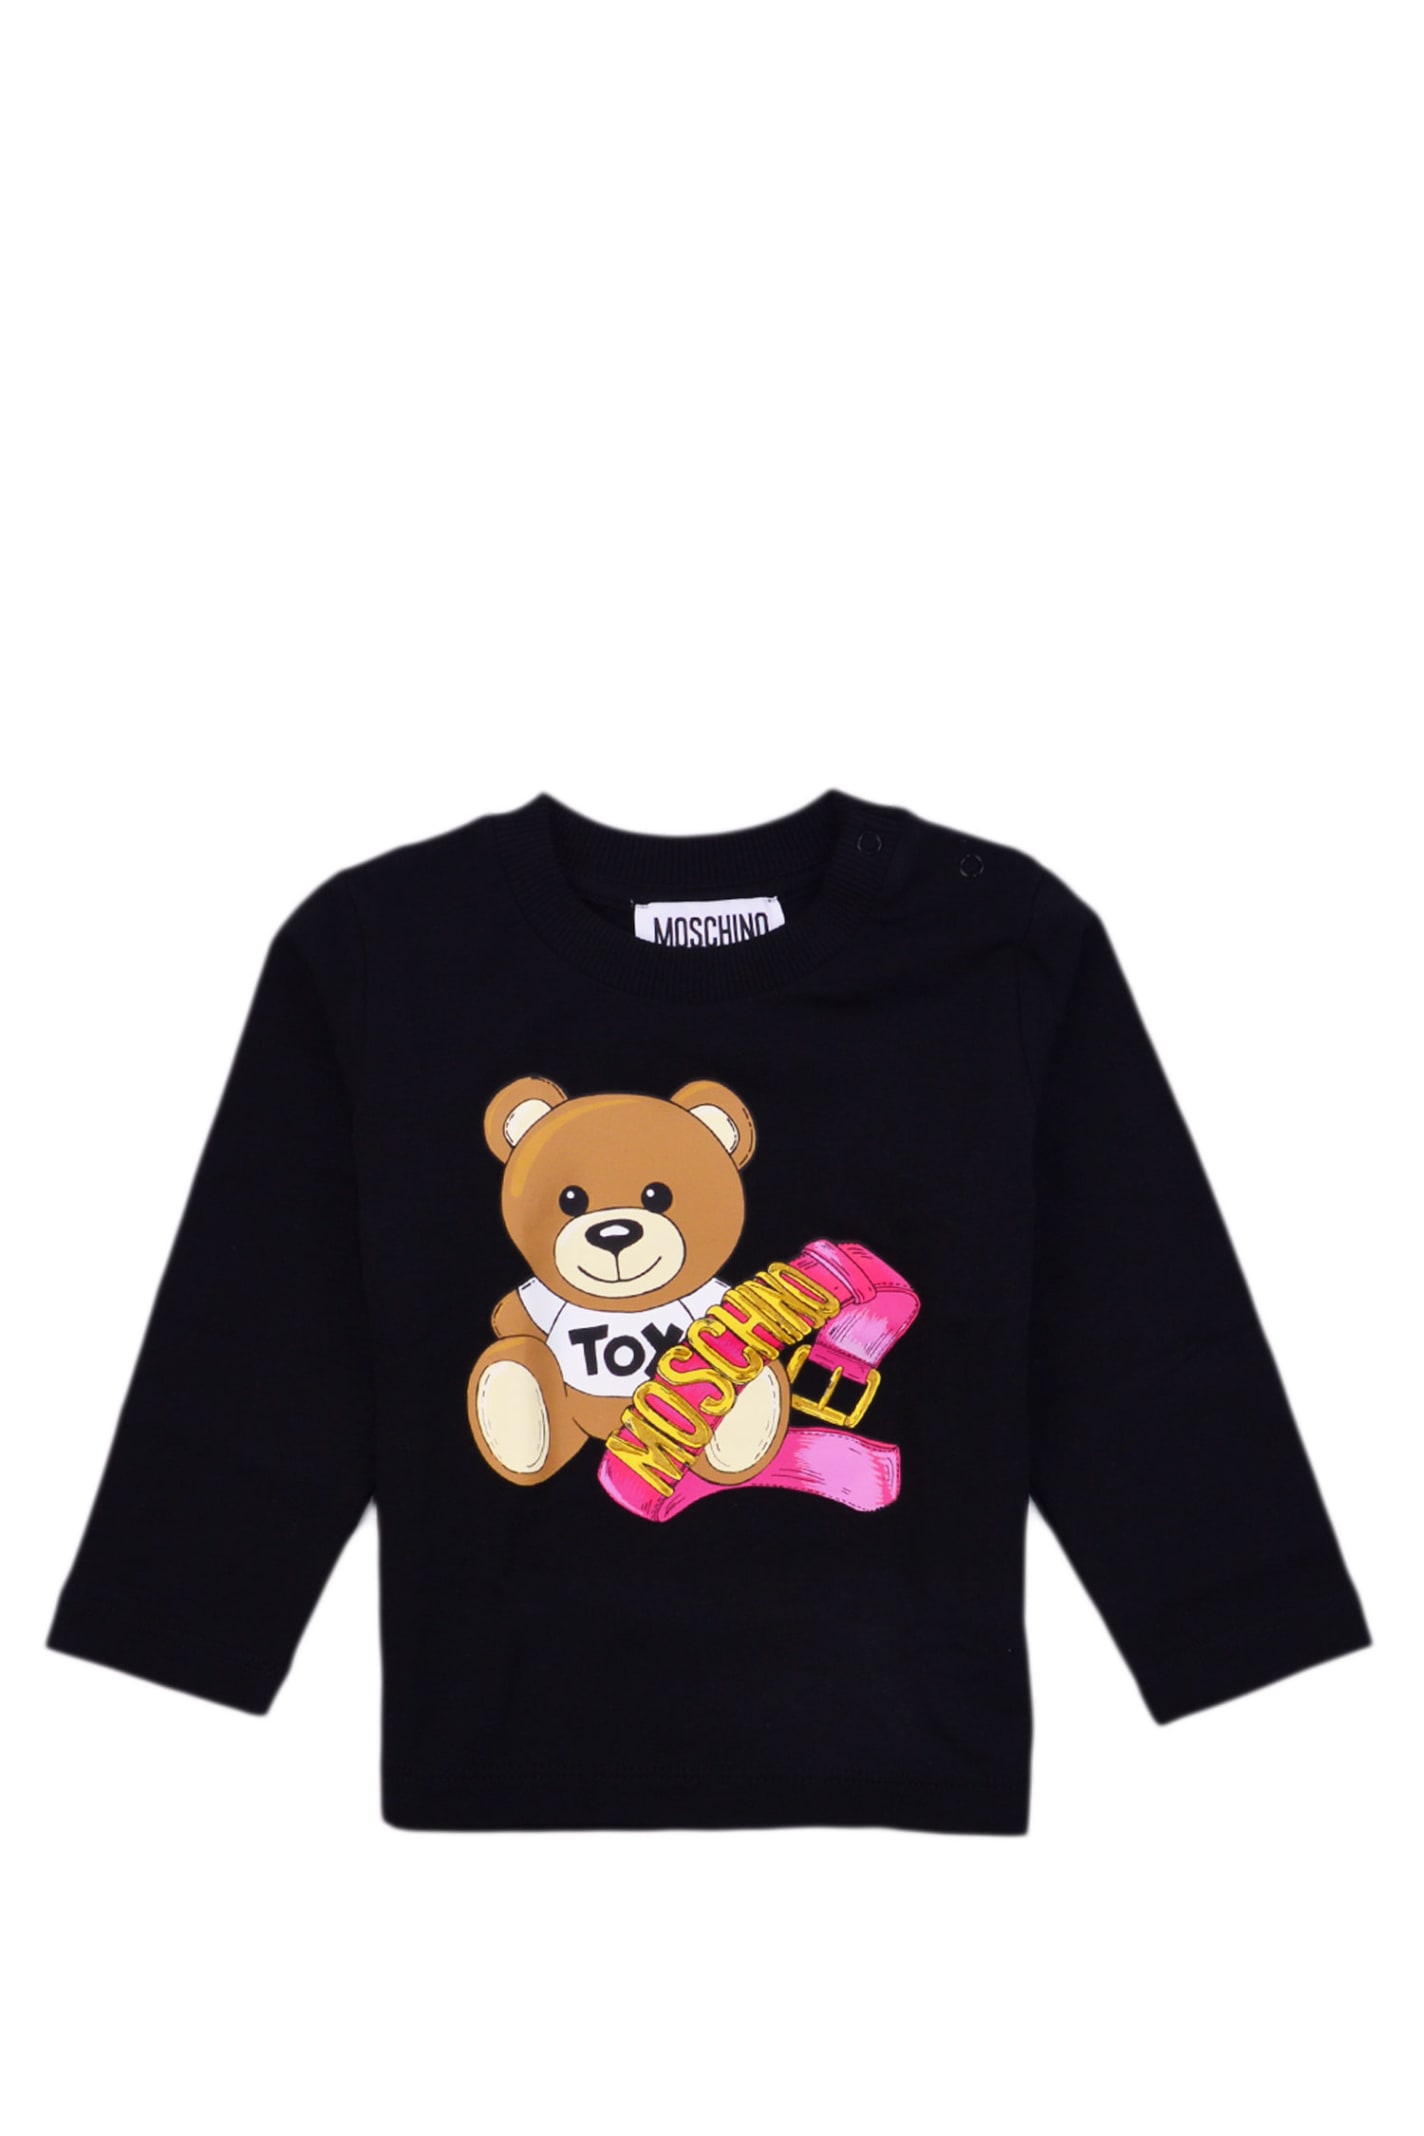 Moschino Babies' Cotton T-shirt In Black